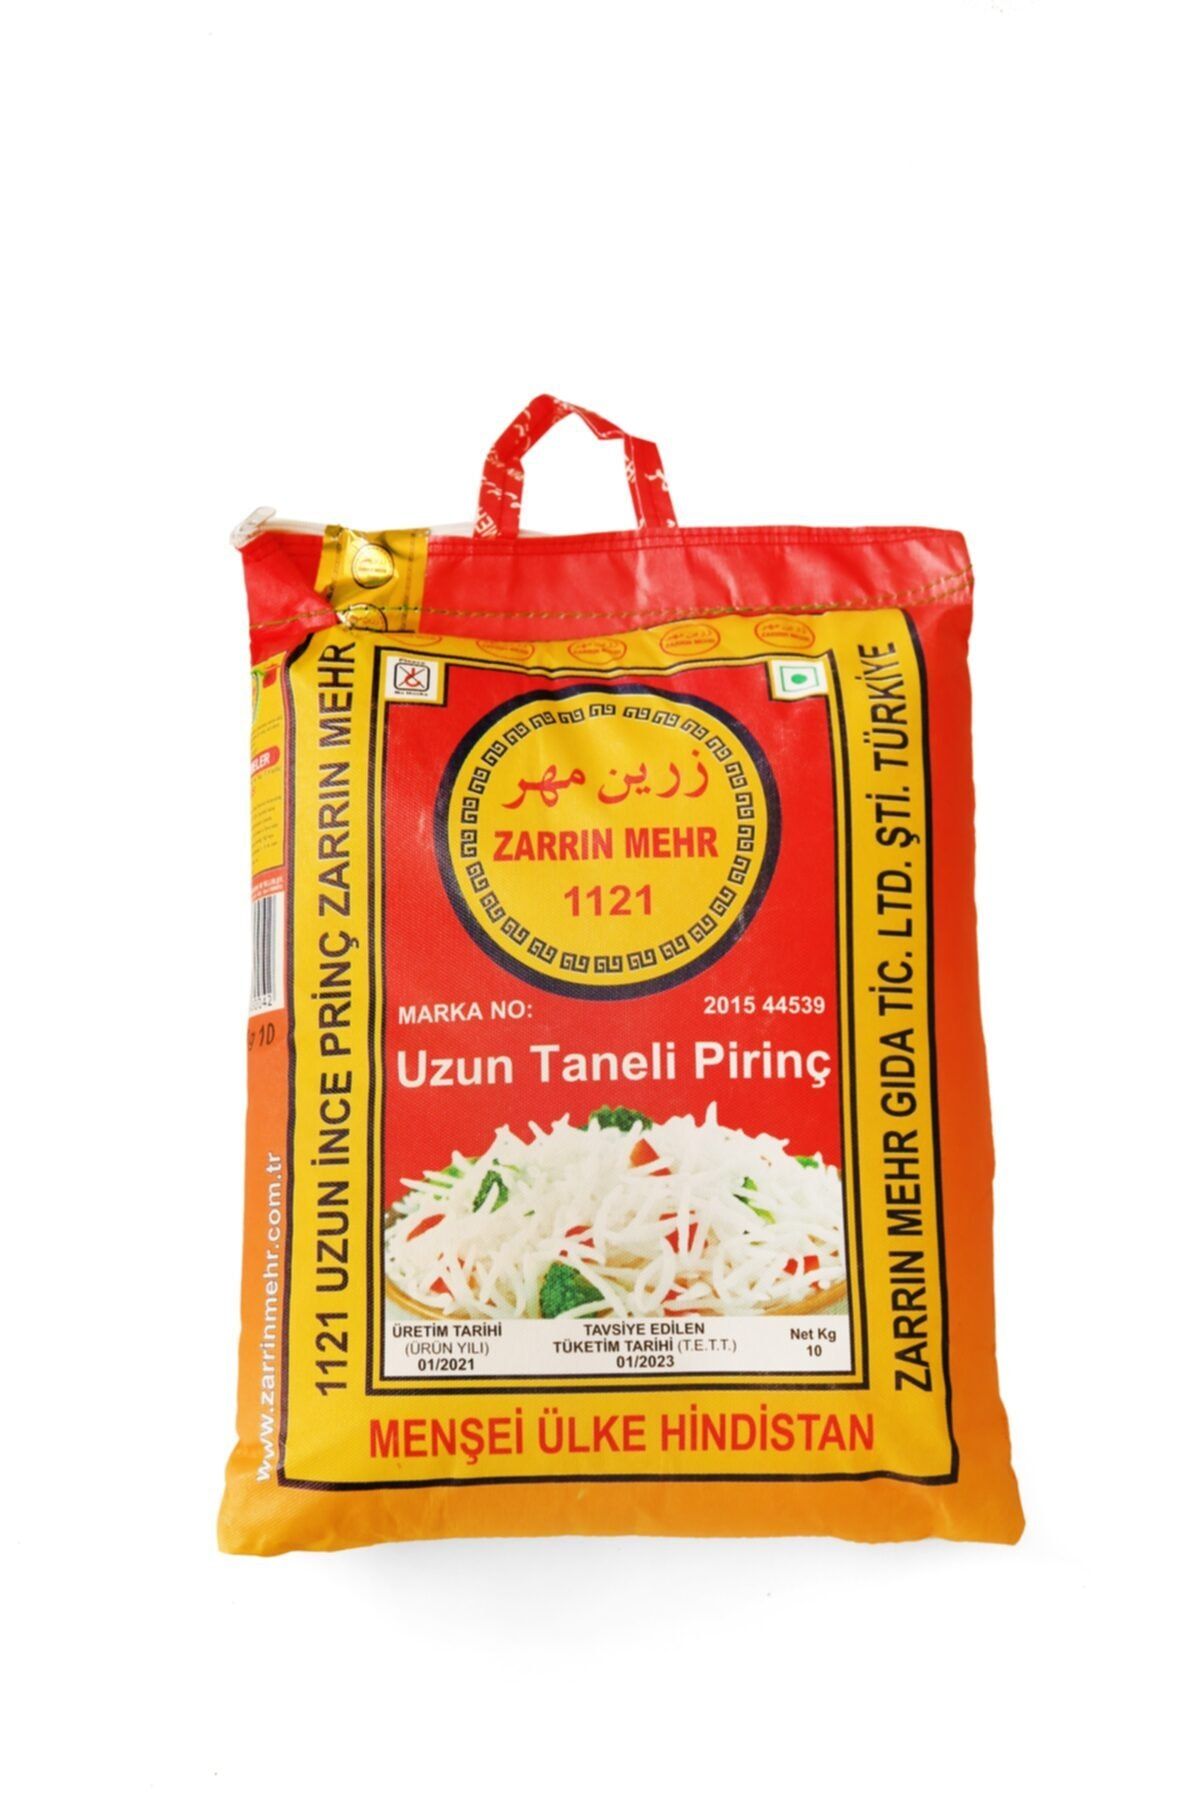 Zarrin Mehr Zarrın Mehr 1121 Long Grain Rice Pirinç 10kg